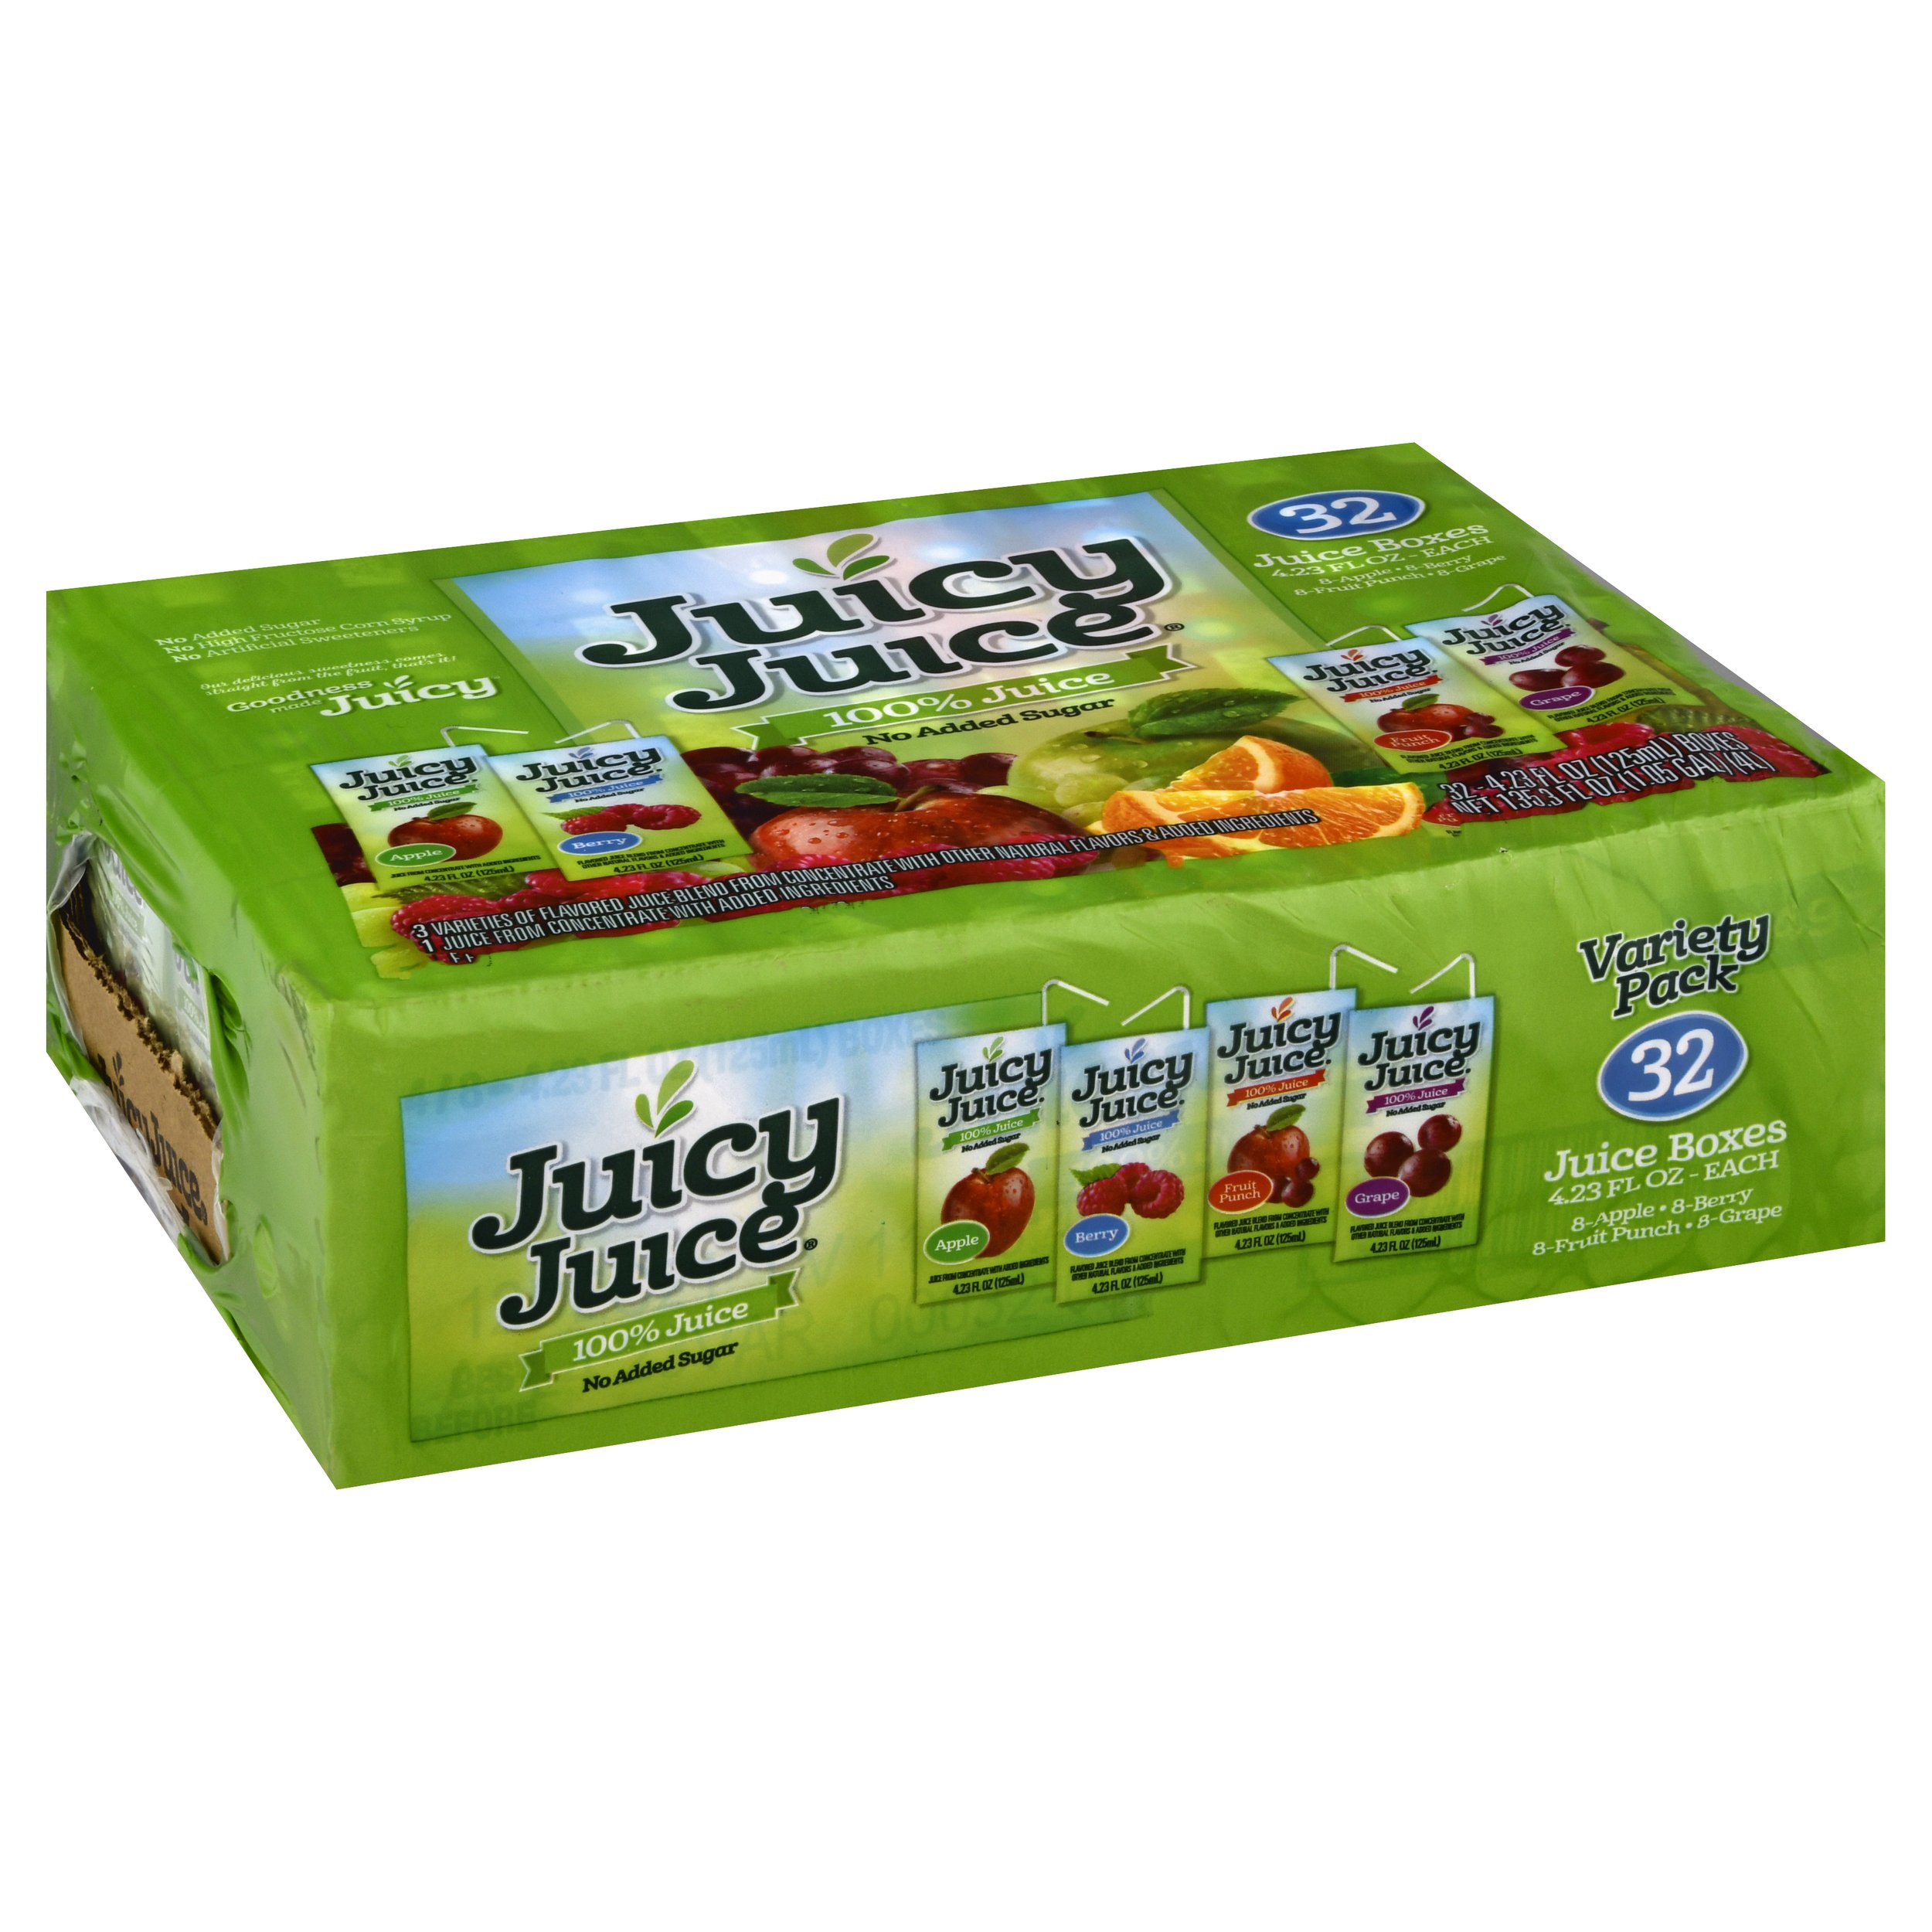 Juicy Juice Variety Pack 4 23 Oz Boxes Shop Juice At H E B